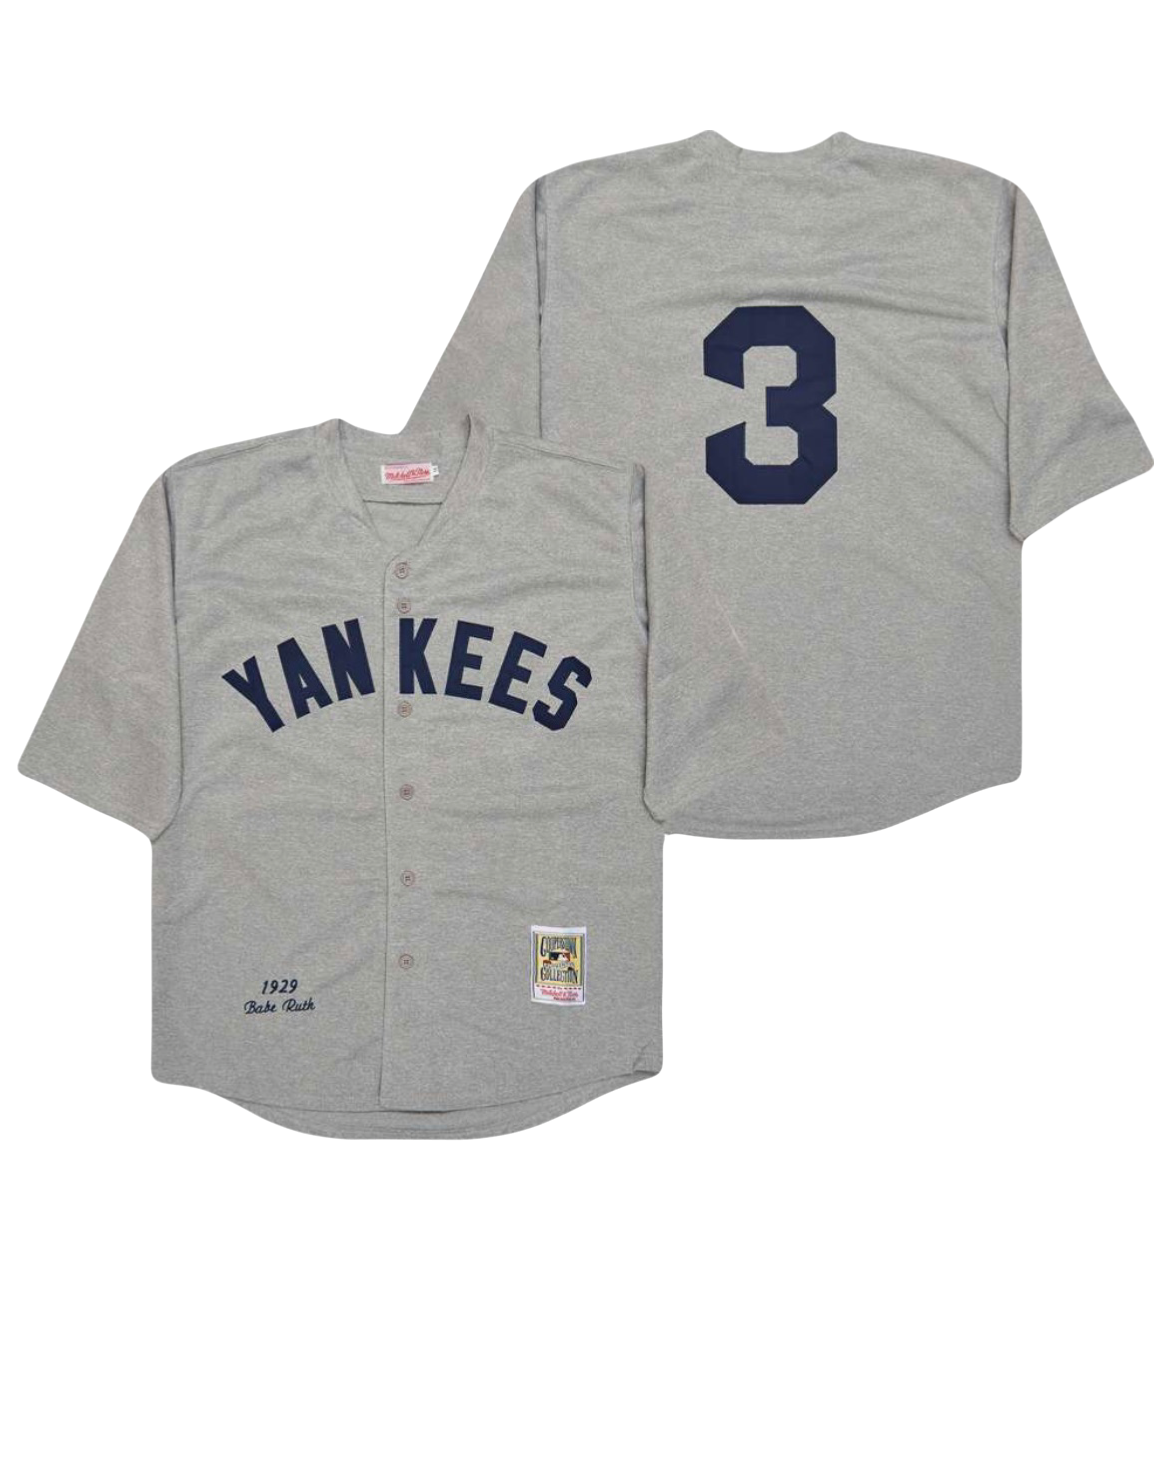 Babe Ruth Jersey - New York Yankees 1929 Away Throwback MLB Baseball Jersey